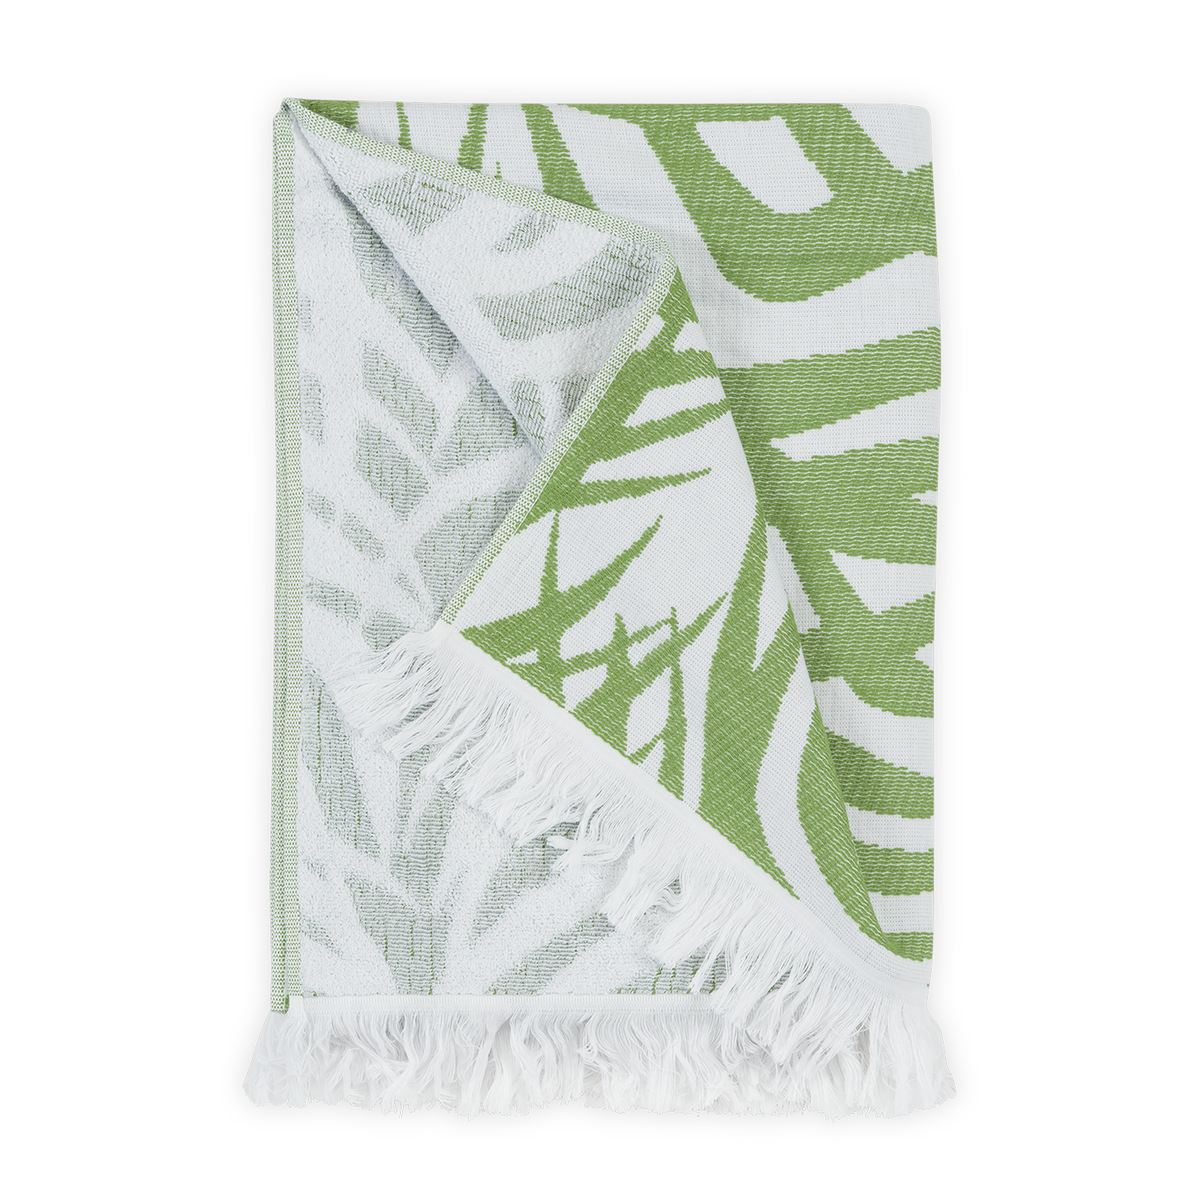 Folded Beach Towel of Matouk Zebra Palm in Color Jungle